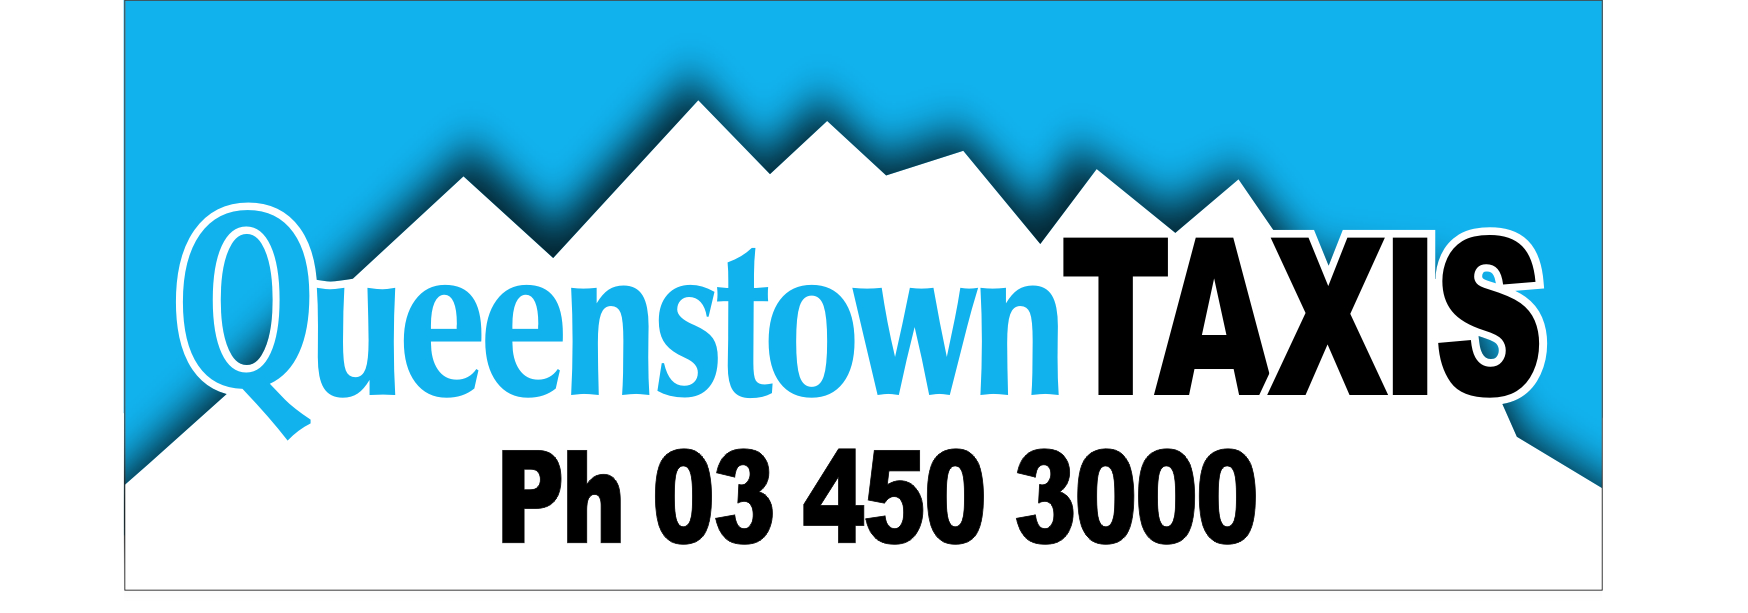 Queenstown Taxis Logo. Phone 03 450 3000